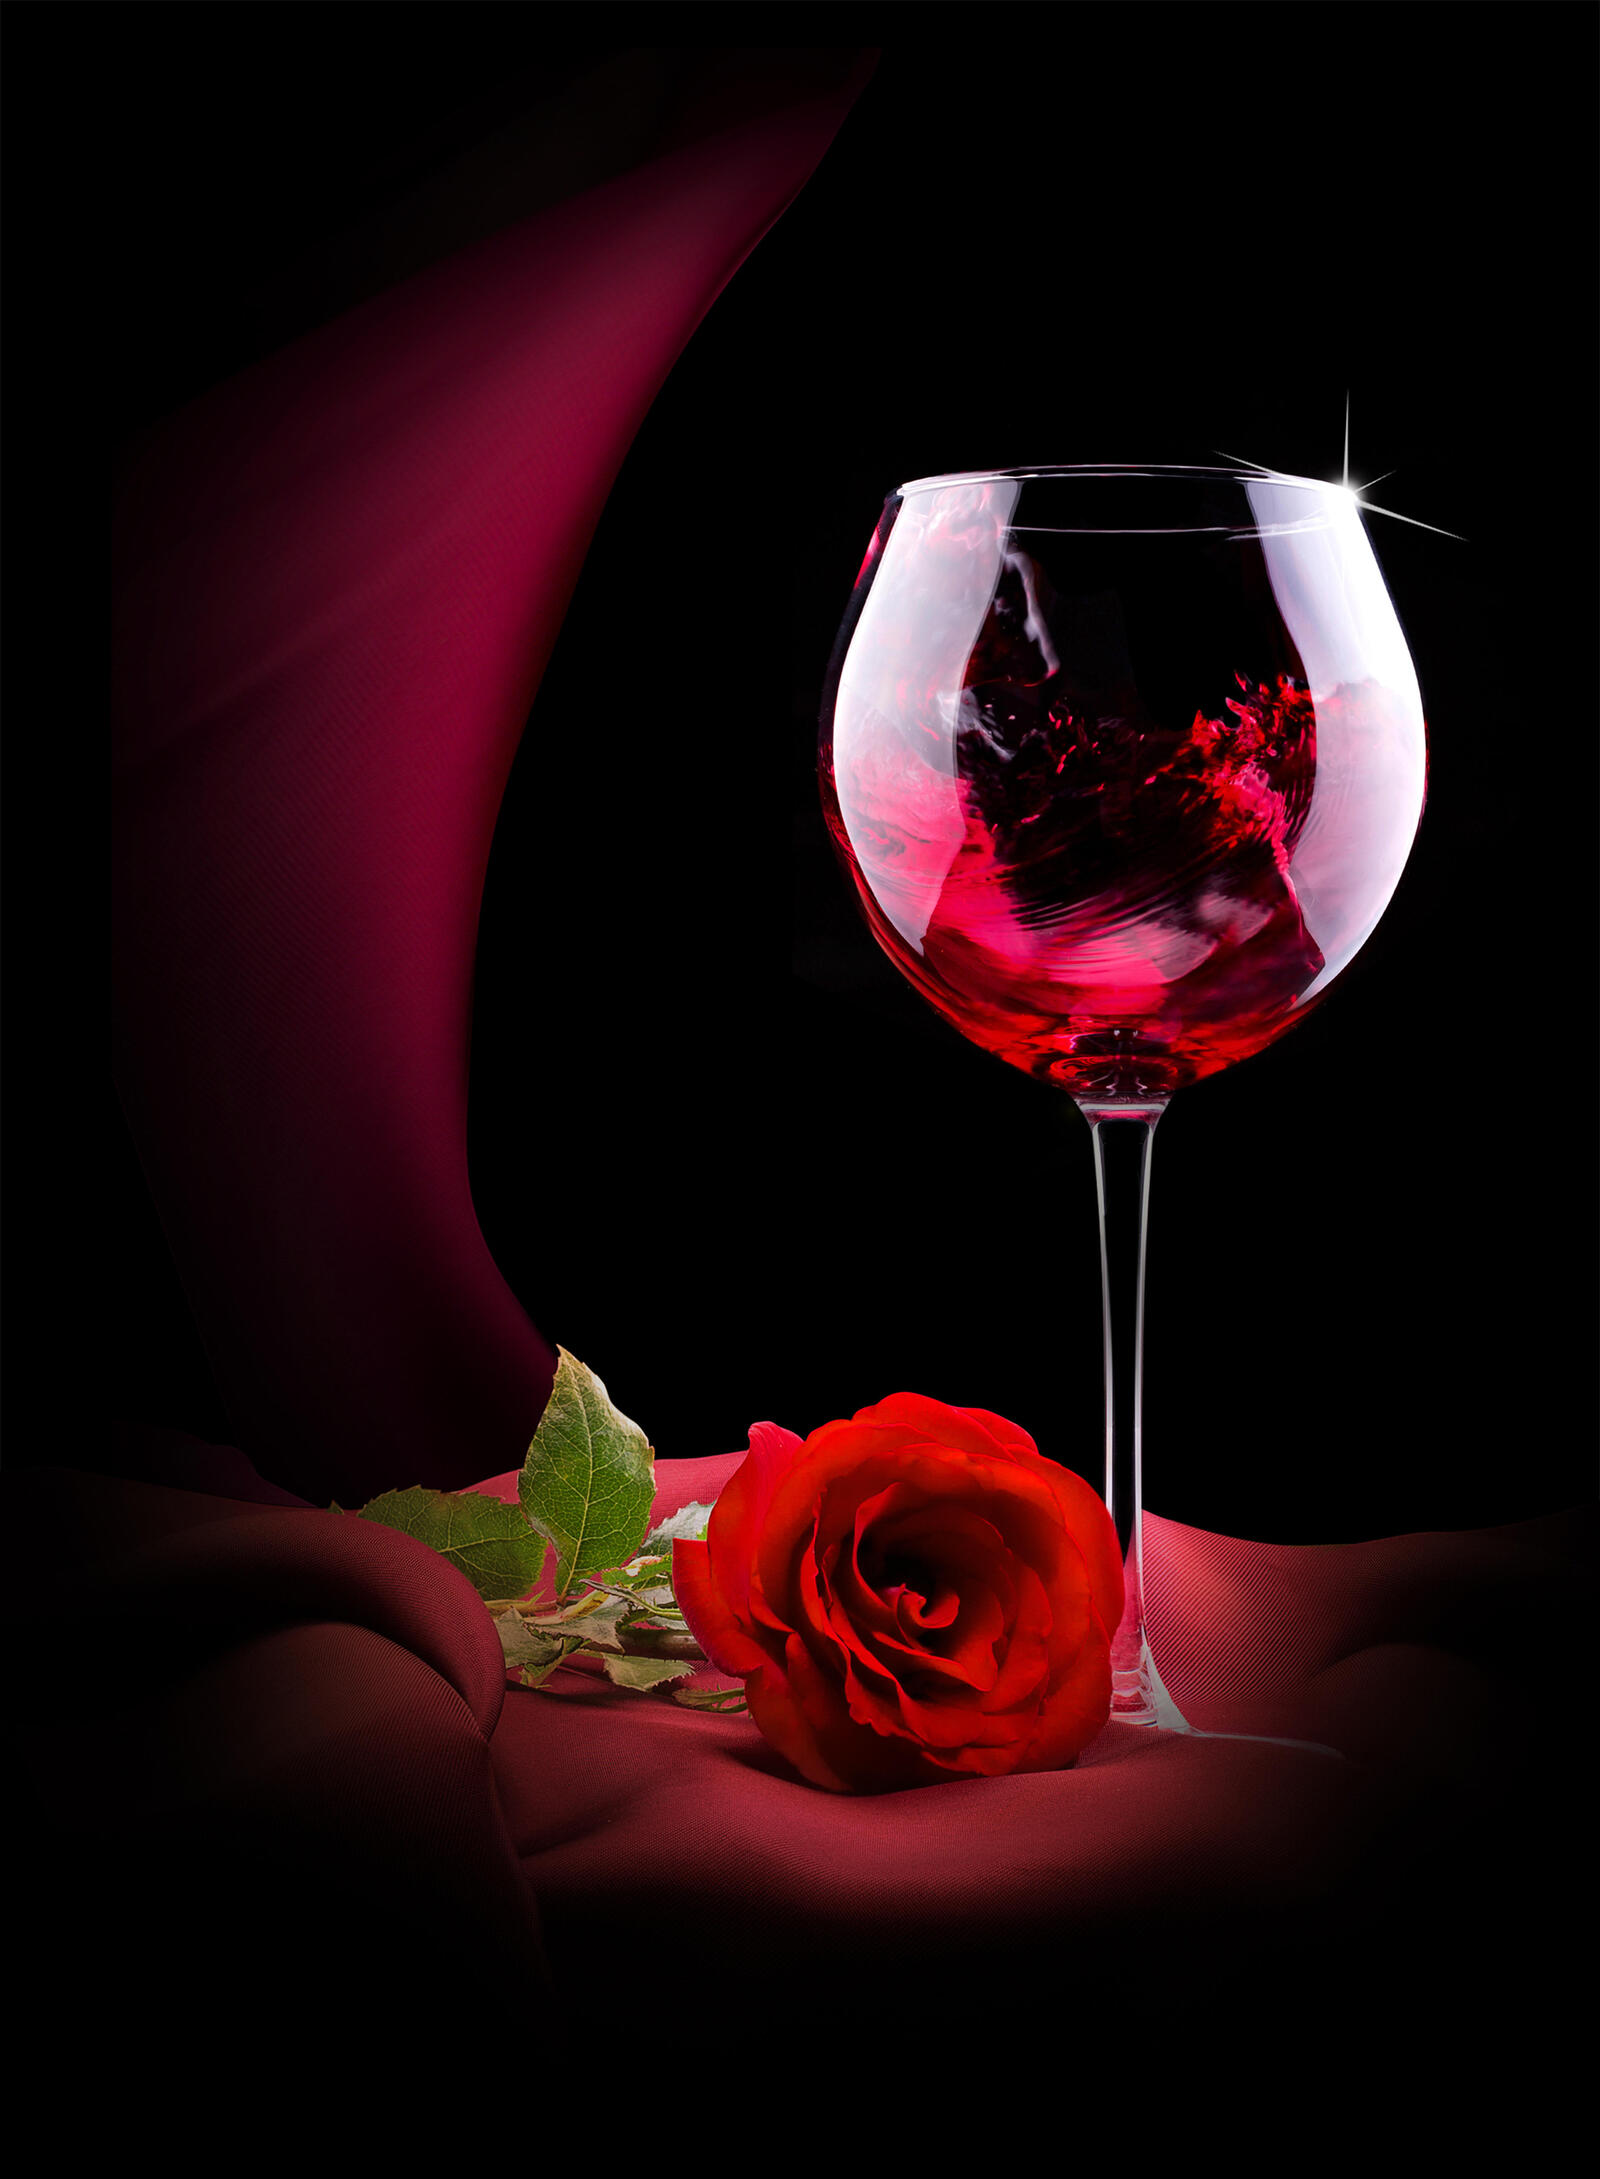 Wallpapers Romance Wineglasses Wine on the desktop